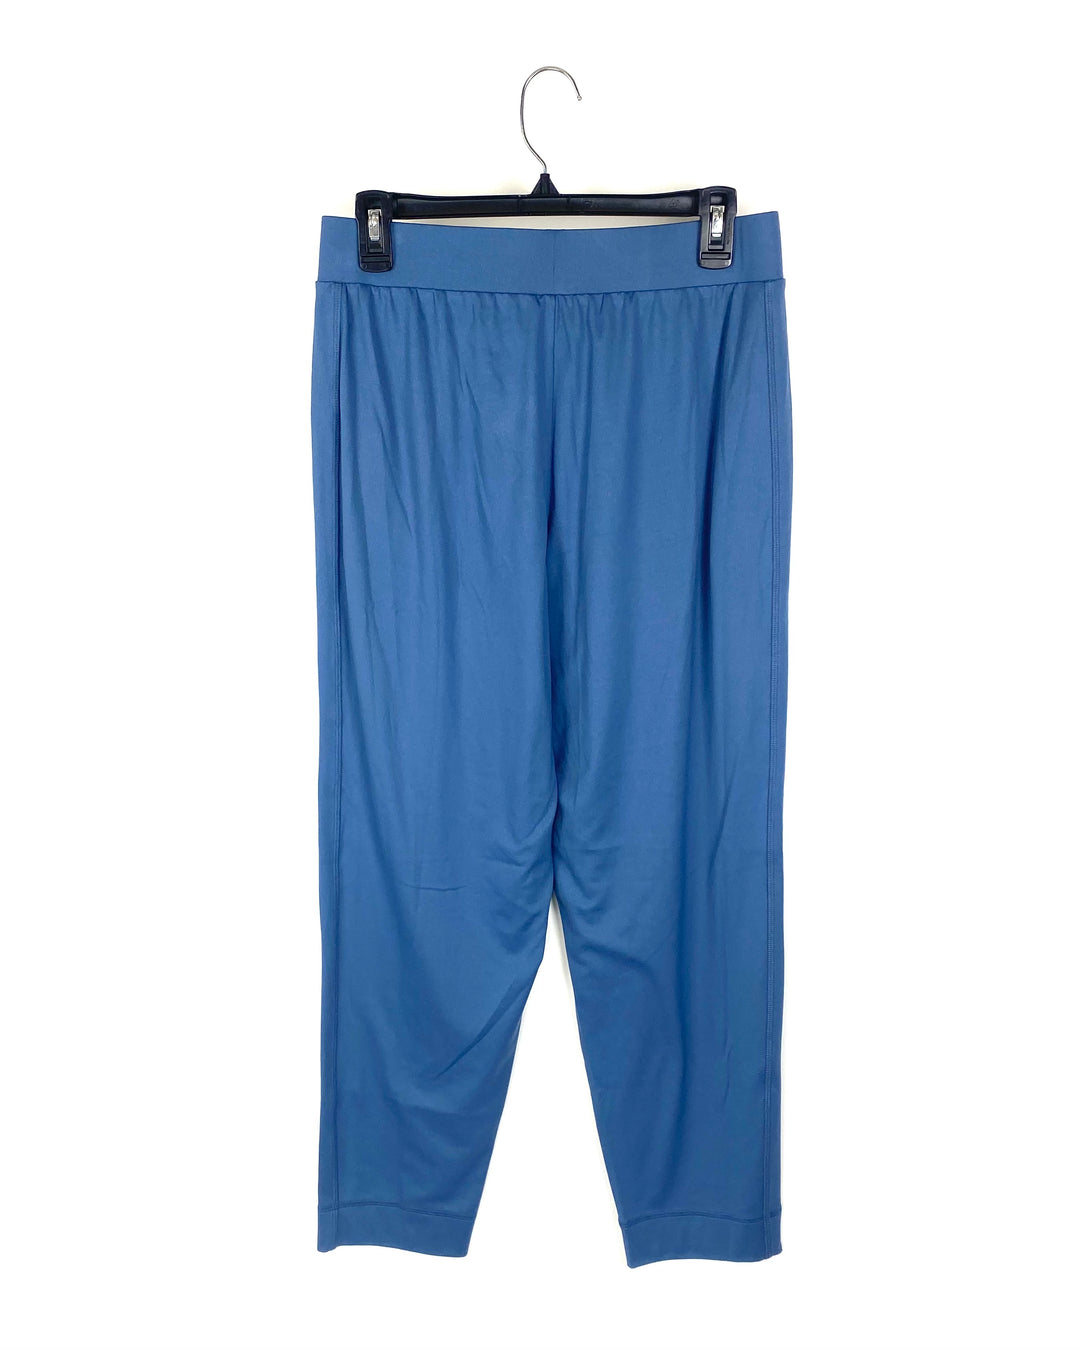 Blue Sweatpants - Extra Small, Small, Medium, Large